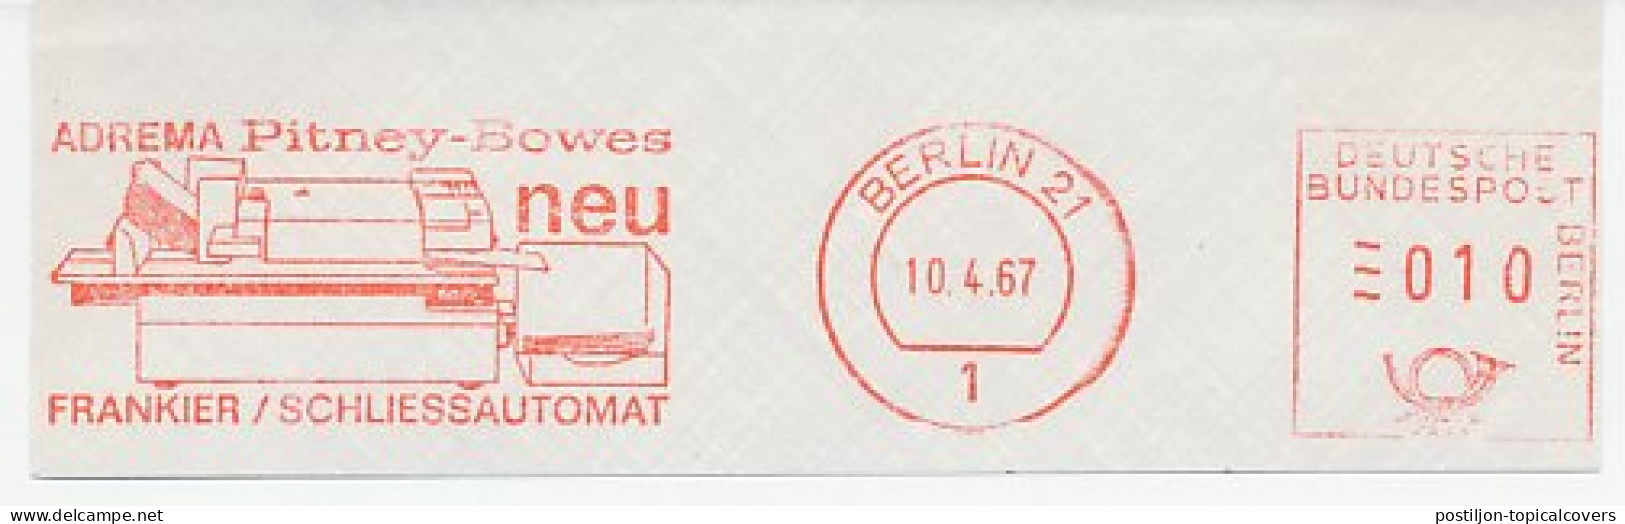 Meter Cut Germany 1967 Pitney Bowes- Adrema - Franking Machine - Automatenmarken [ATM]